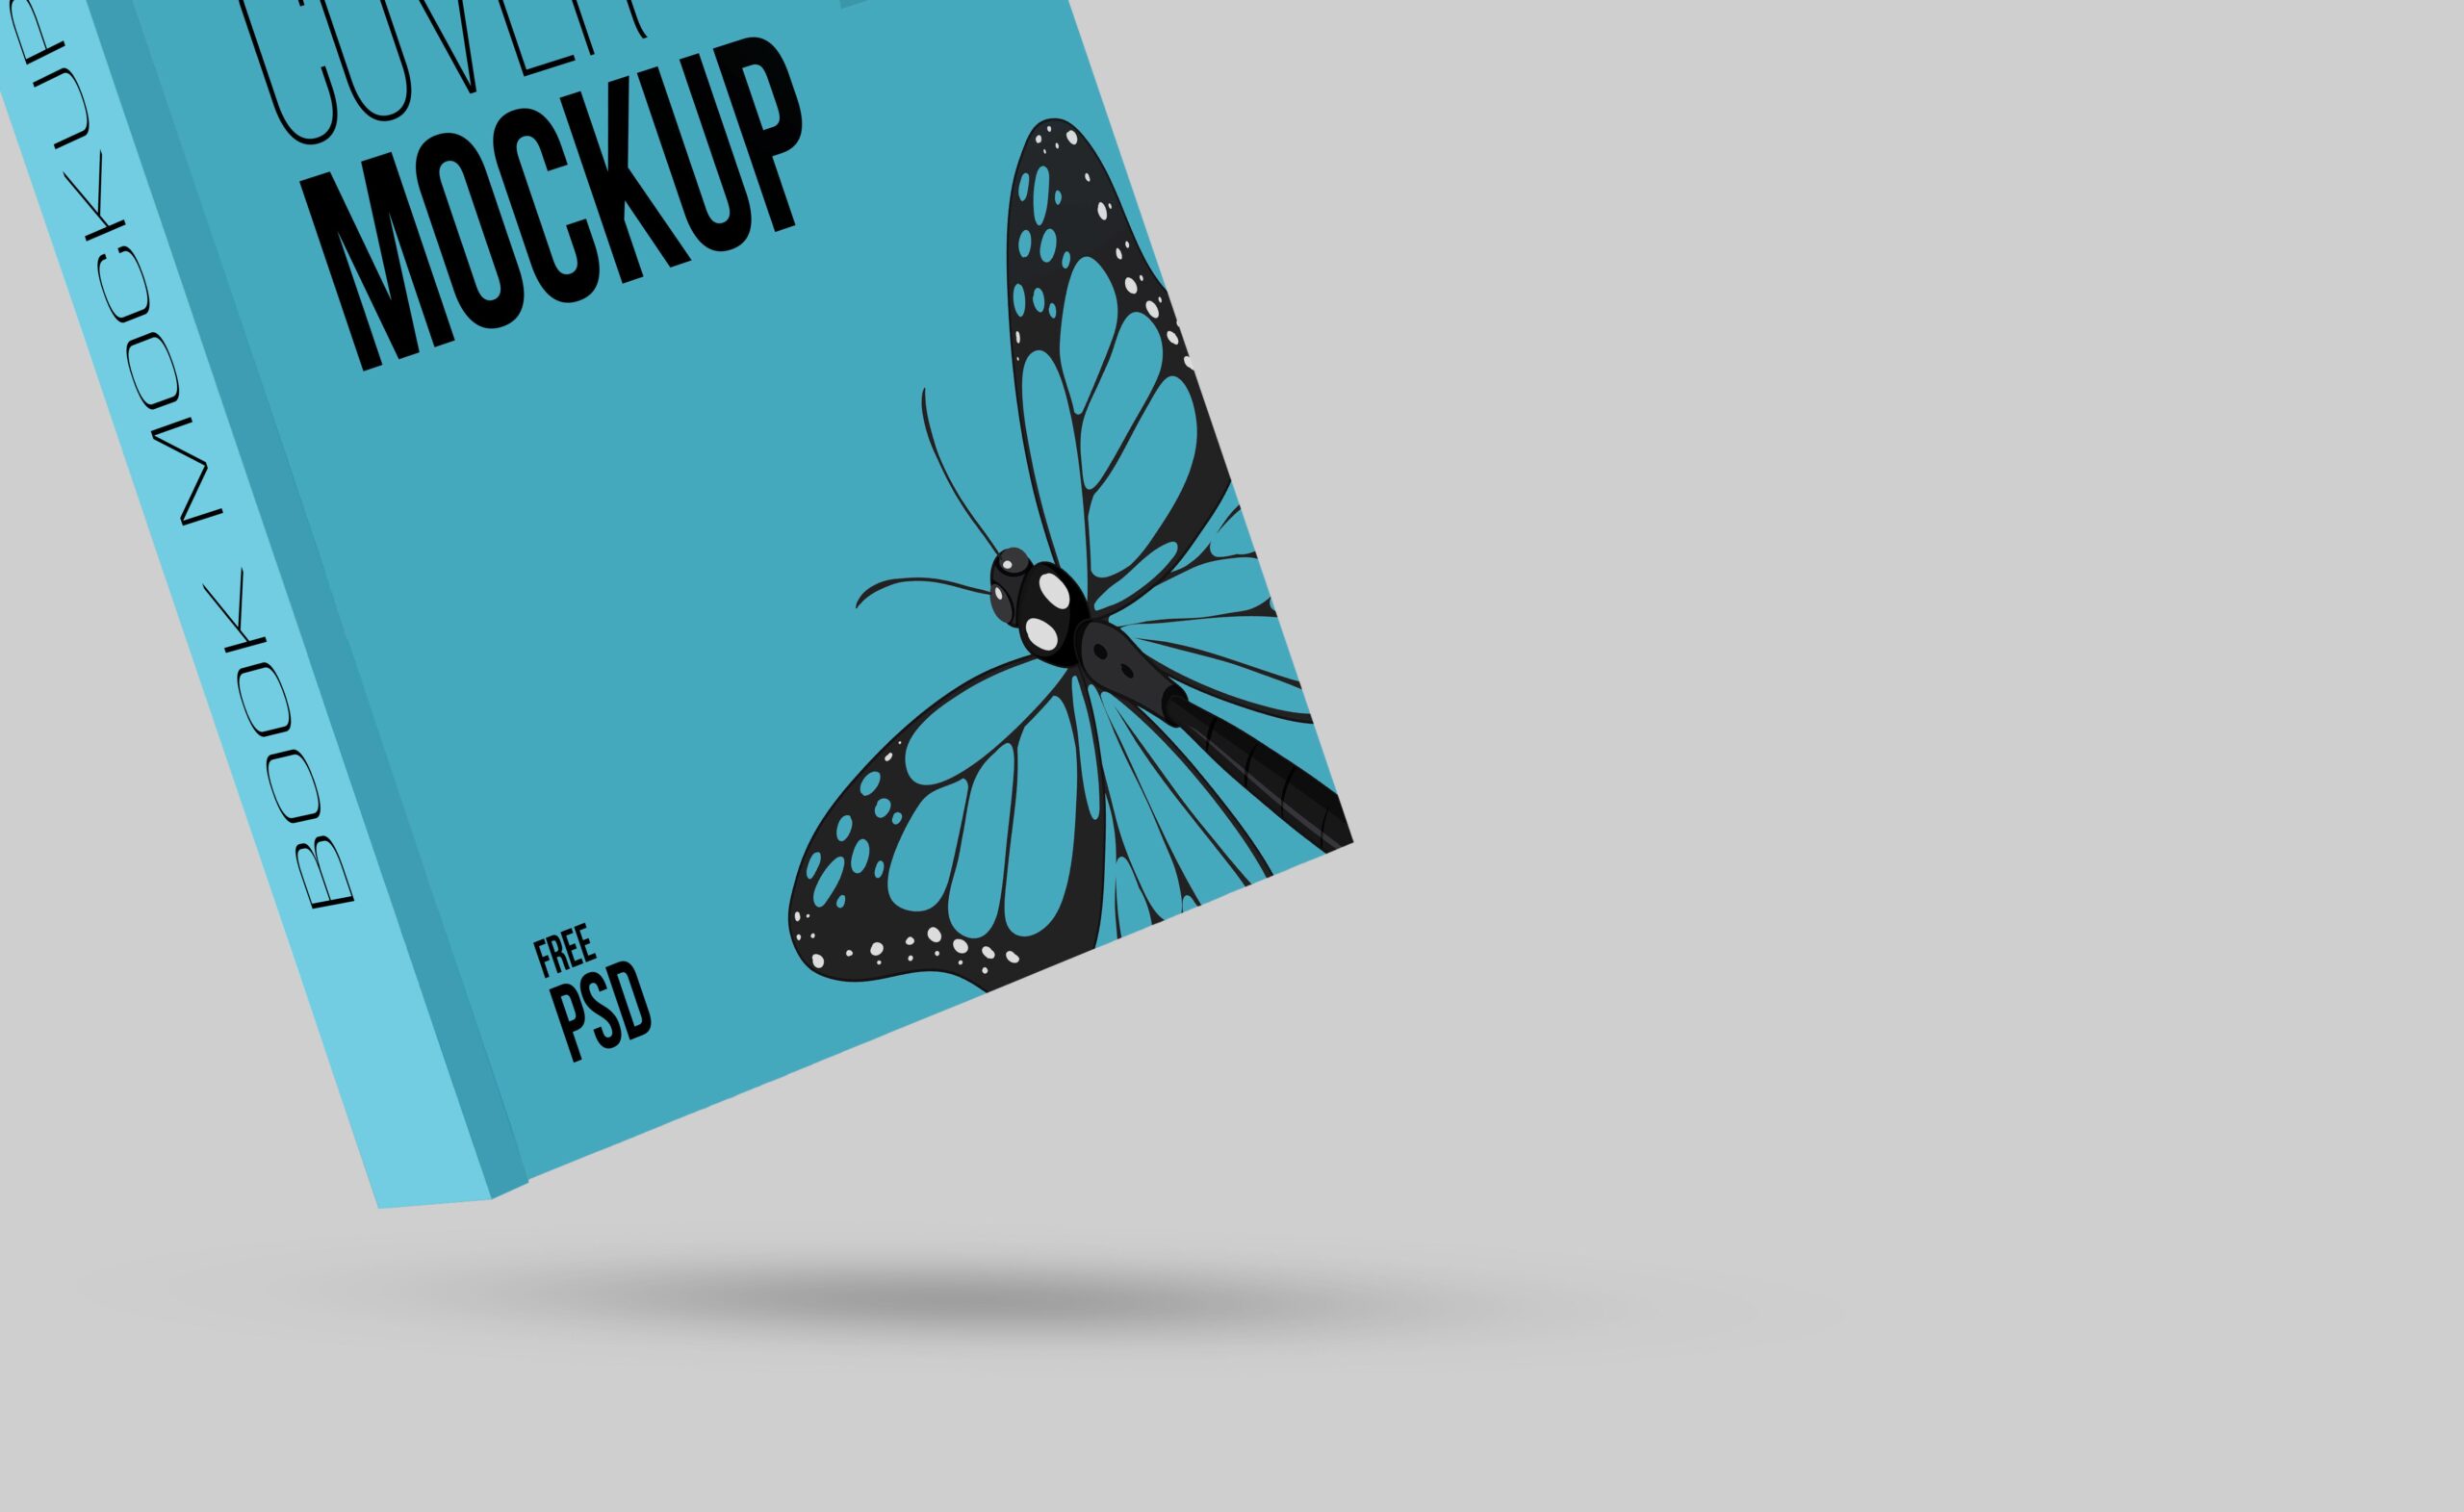 Floating Book Mockup Free PSD Download